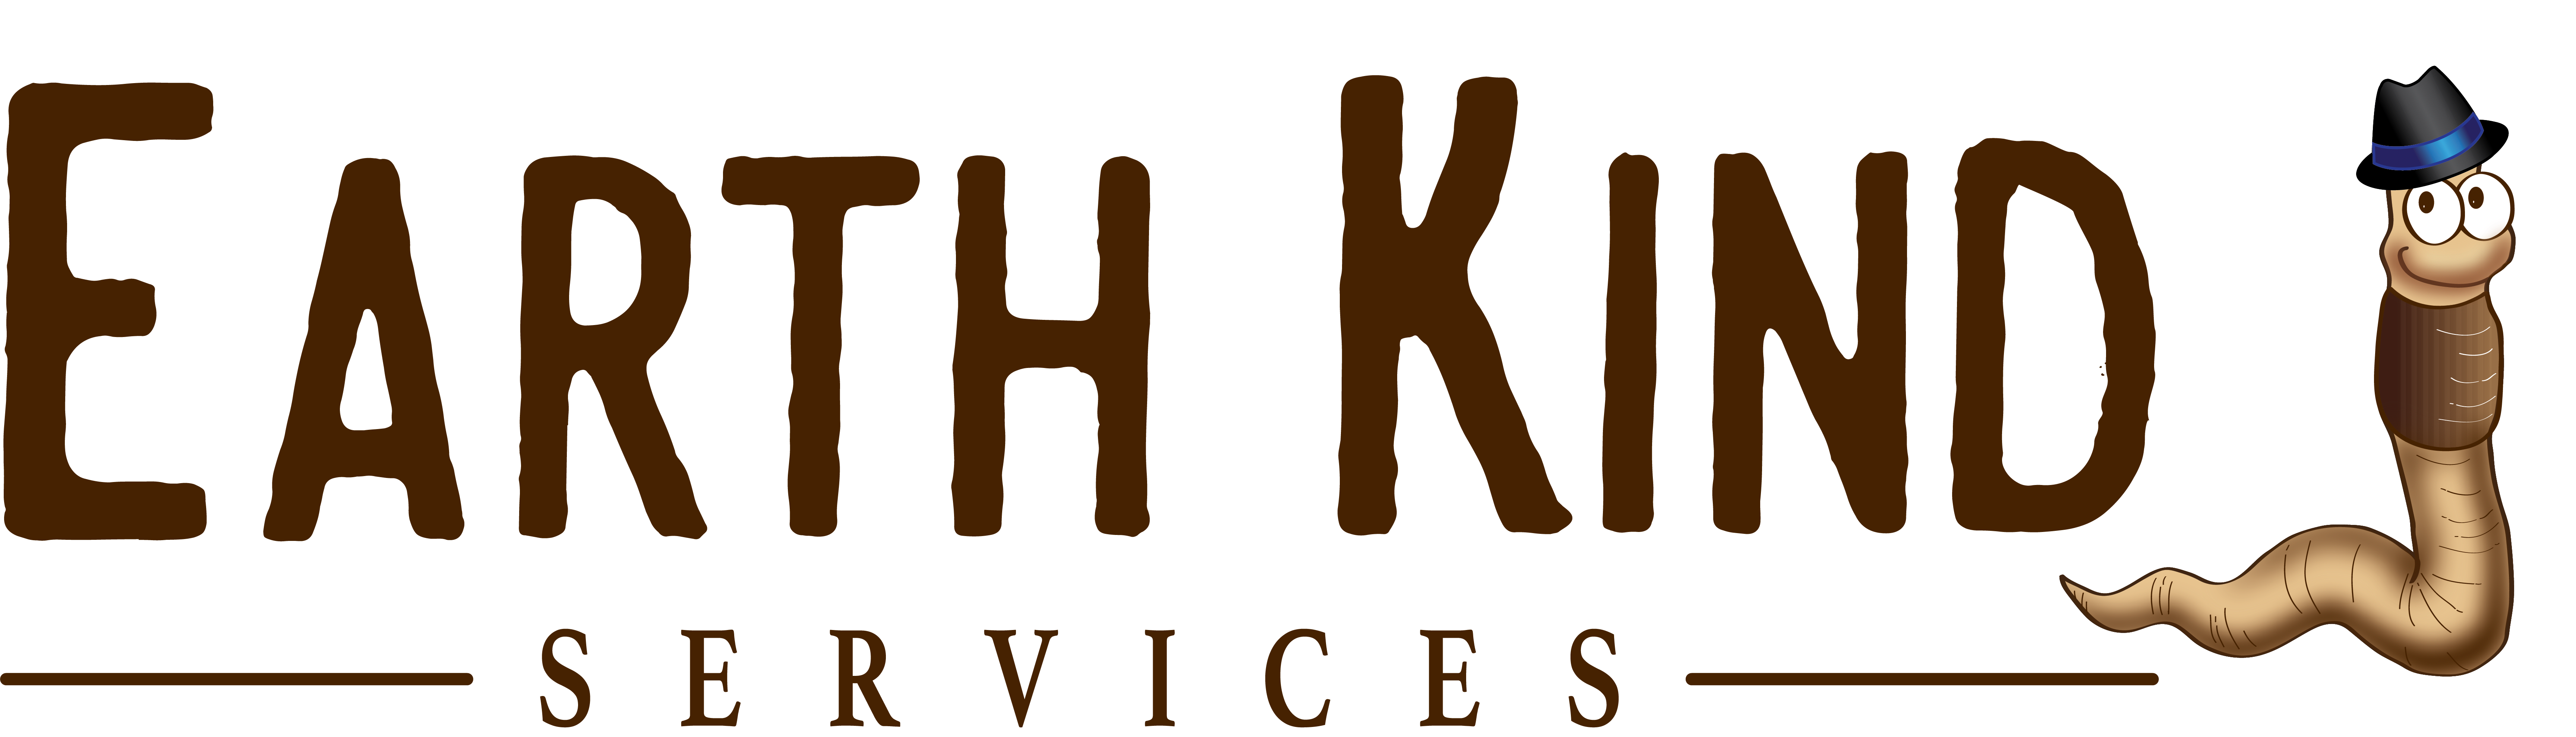 Earth Kind Services Logo